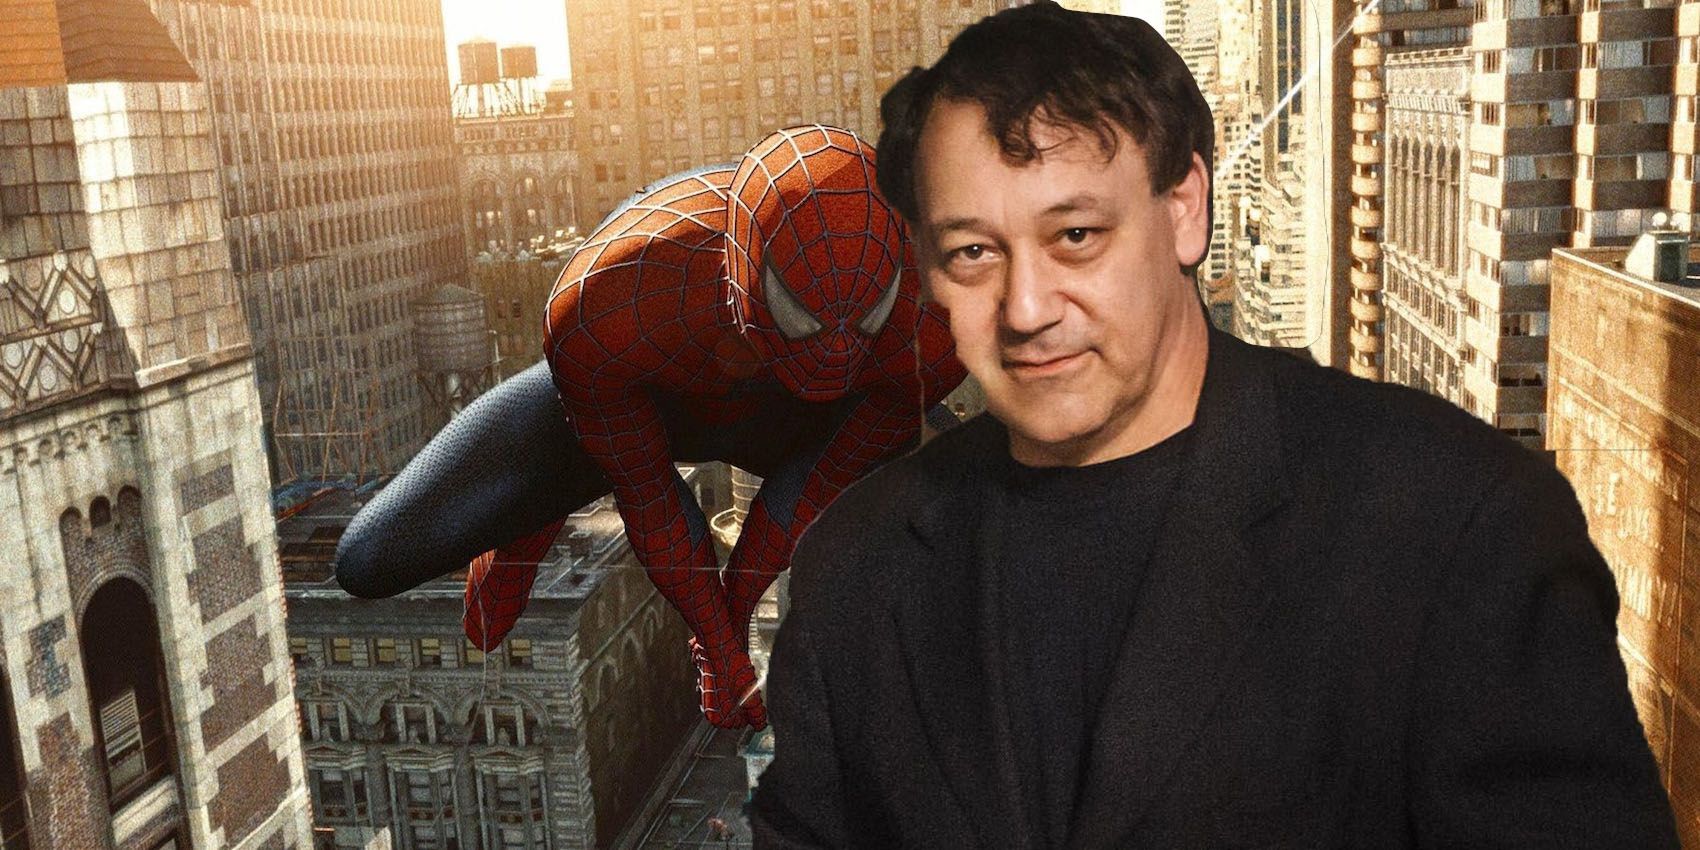 Sam Raimi in front of Spider-Man 2 image